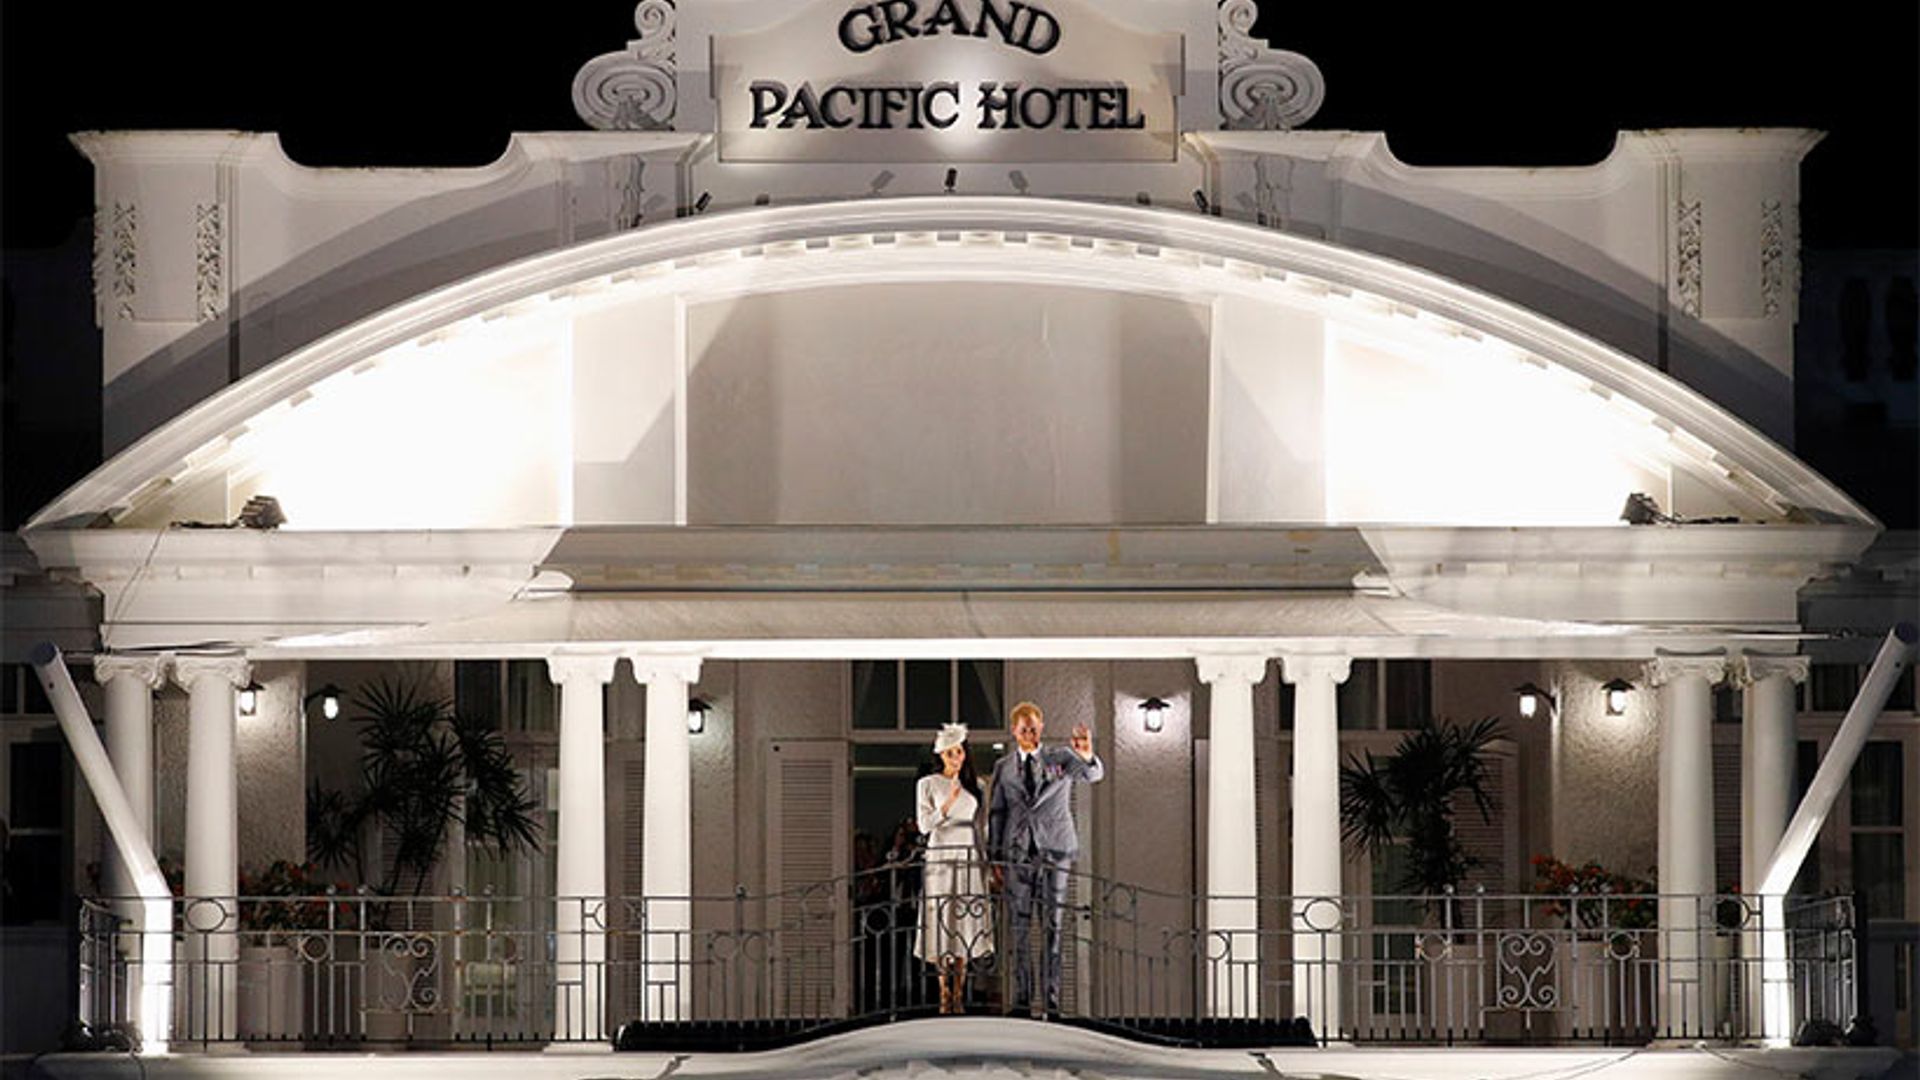 Prince-Harry-Meghan-Markle-Grand-Pacific-Hotel-Fiji